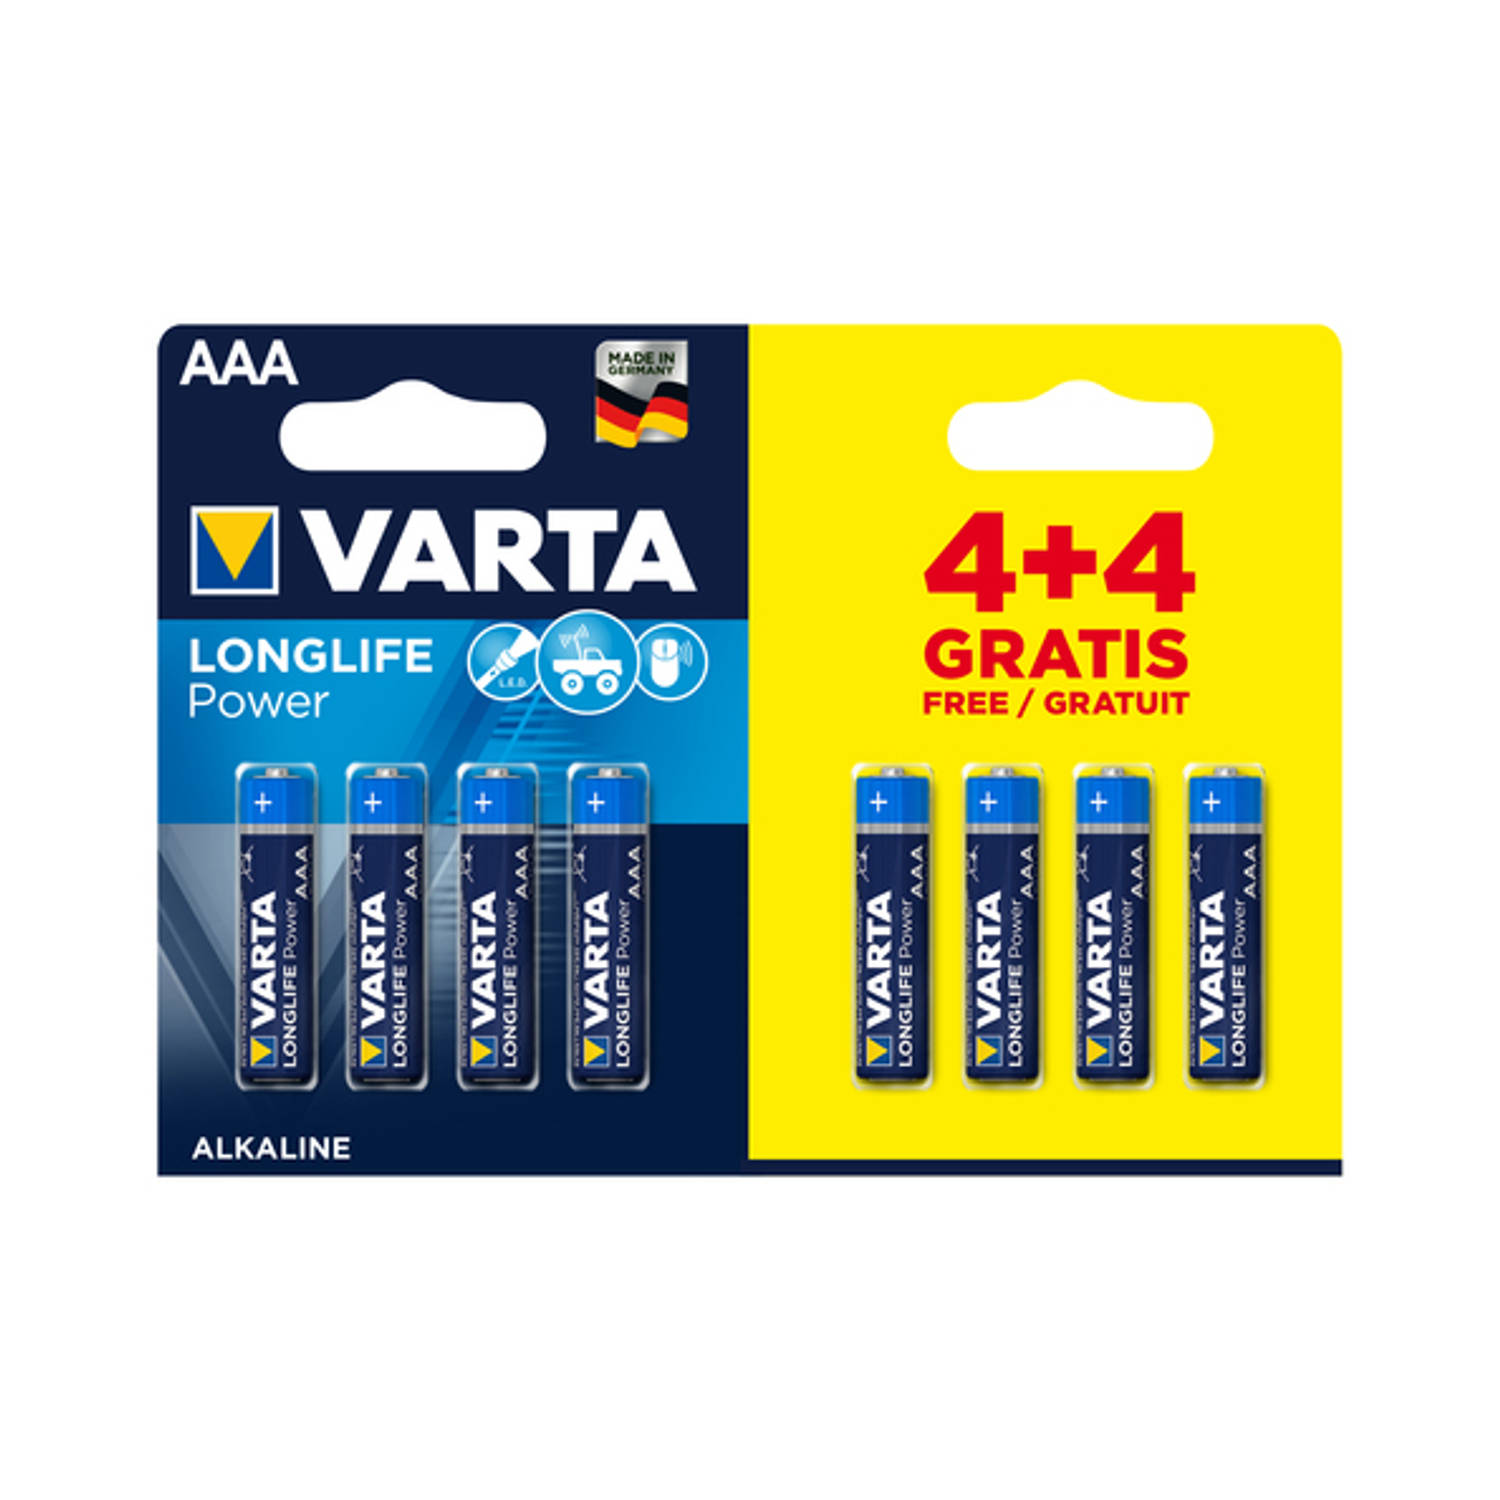 Varta - Longlife Power - AAA - 4+4 x 20